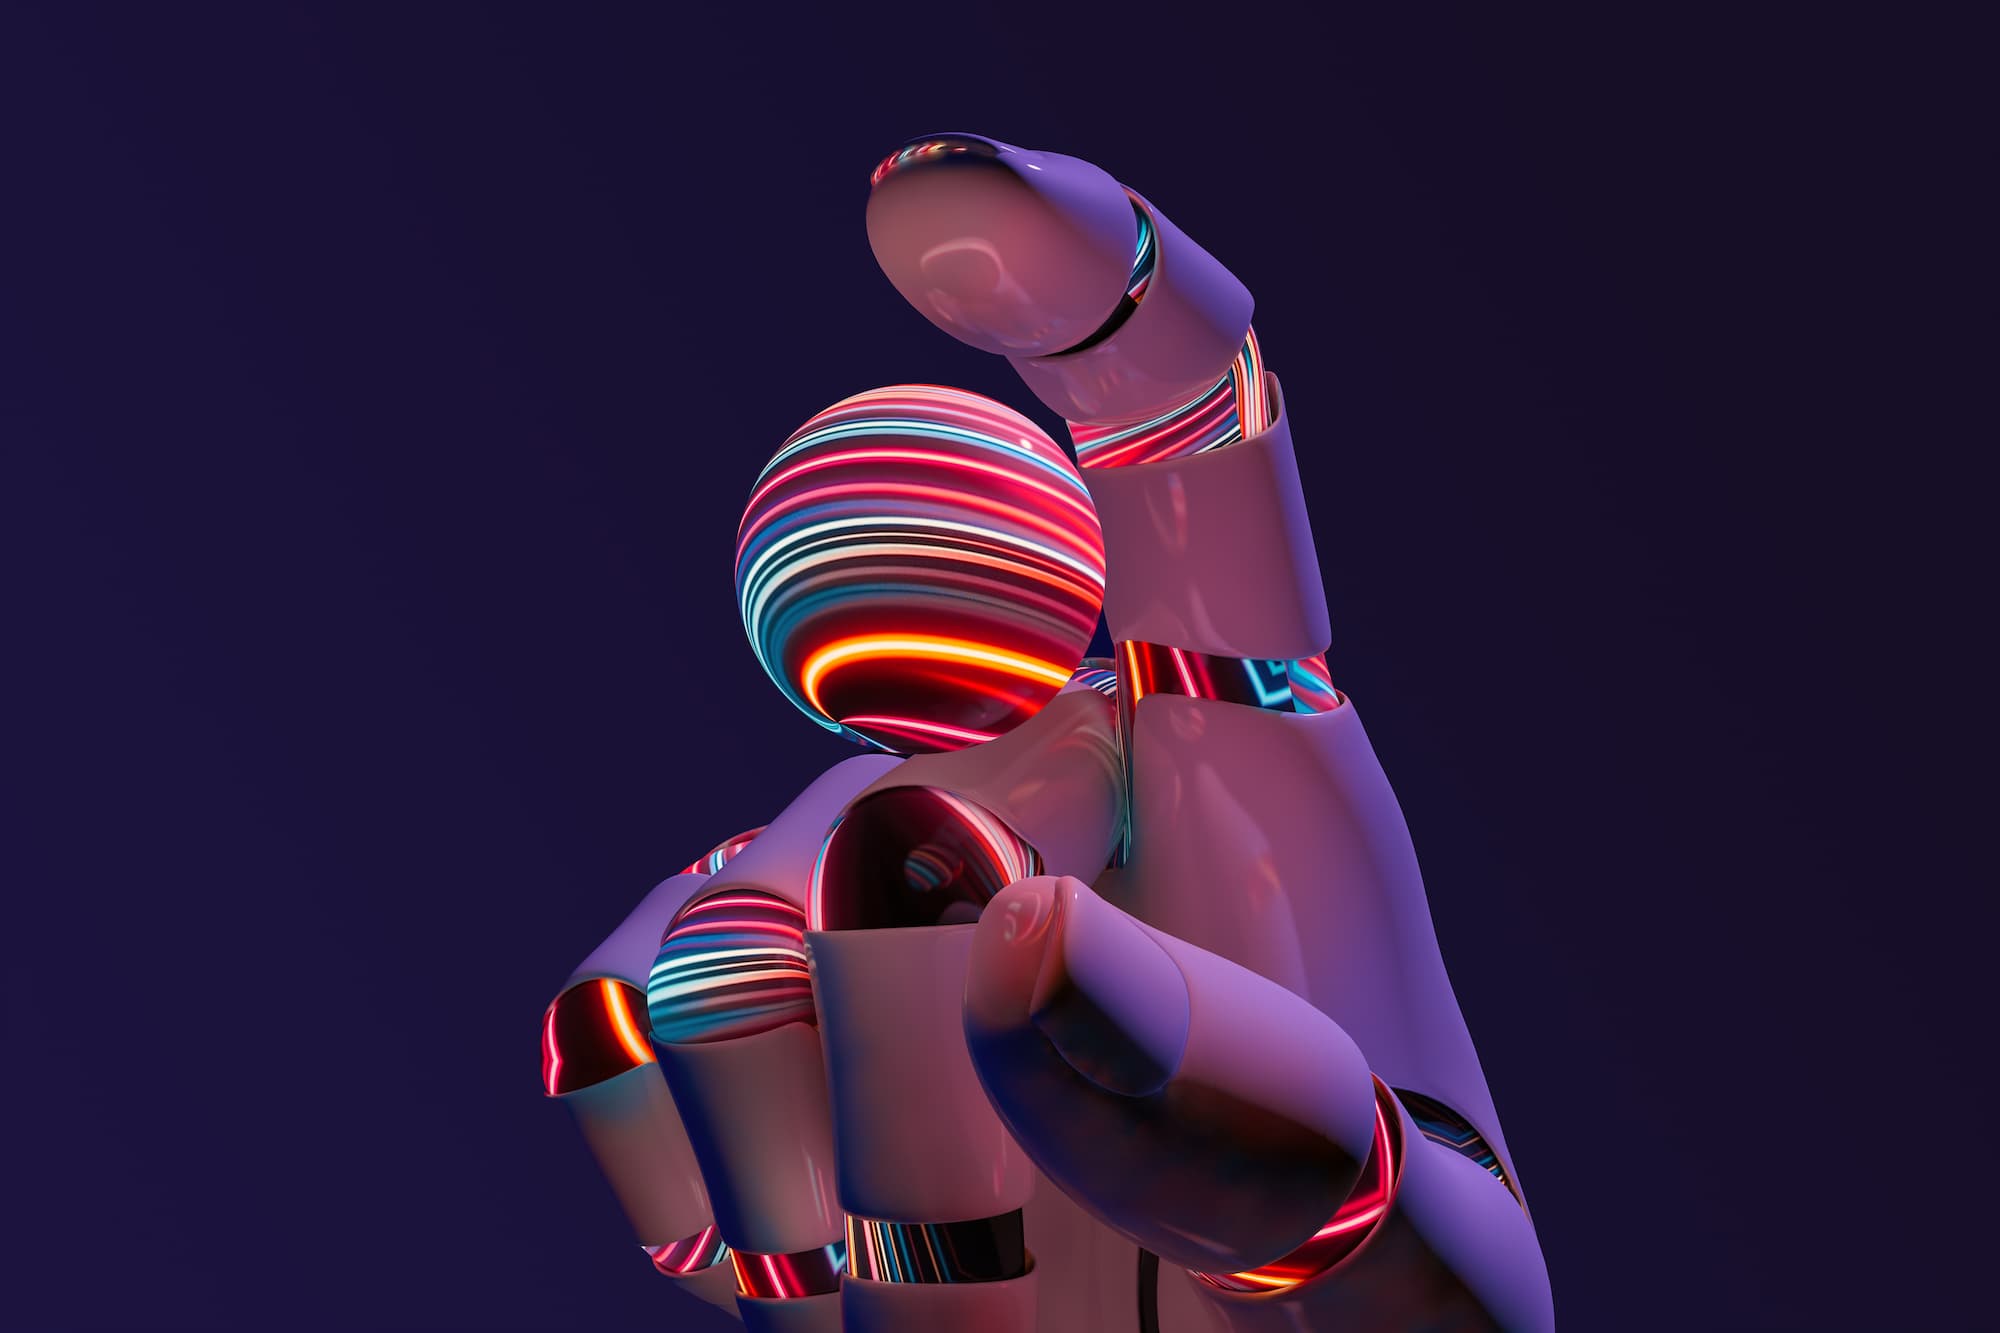 Robot Hand Holding An Artificial Intelligence Sphere